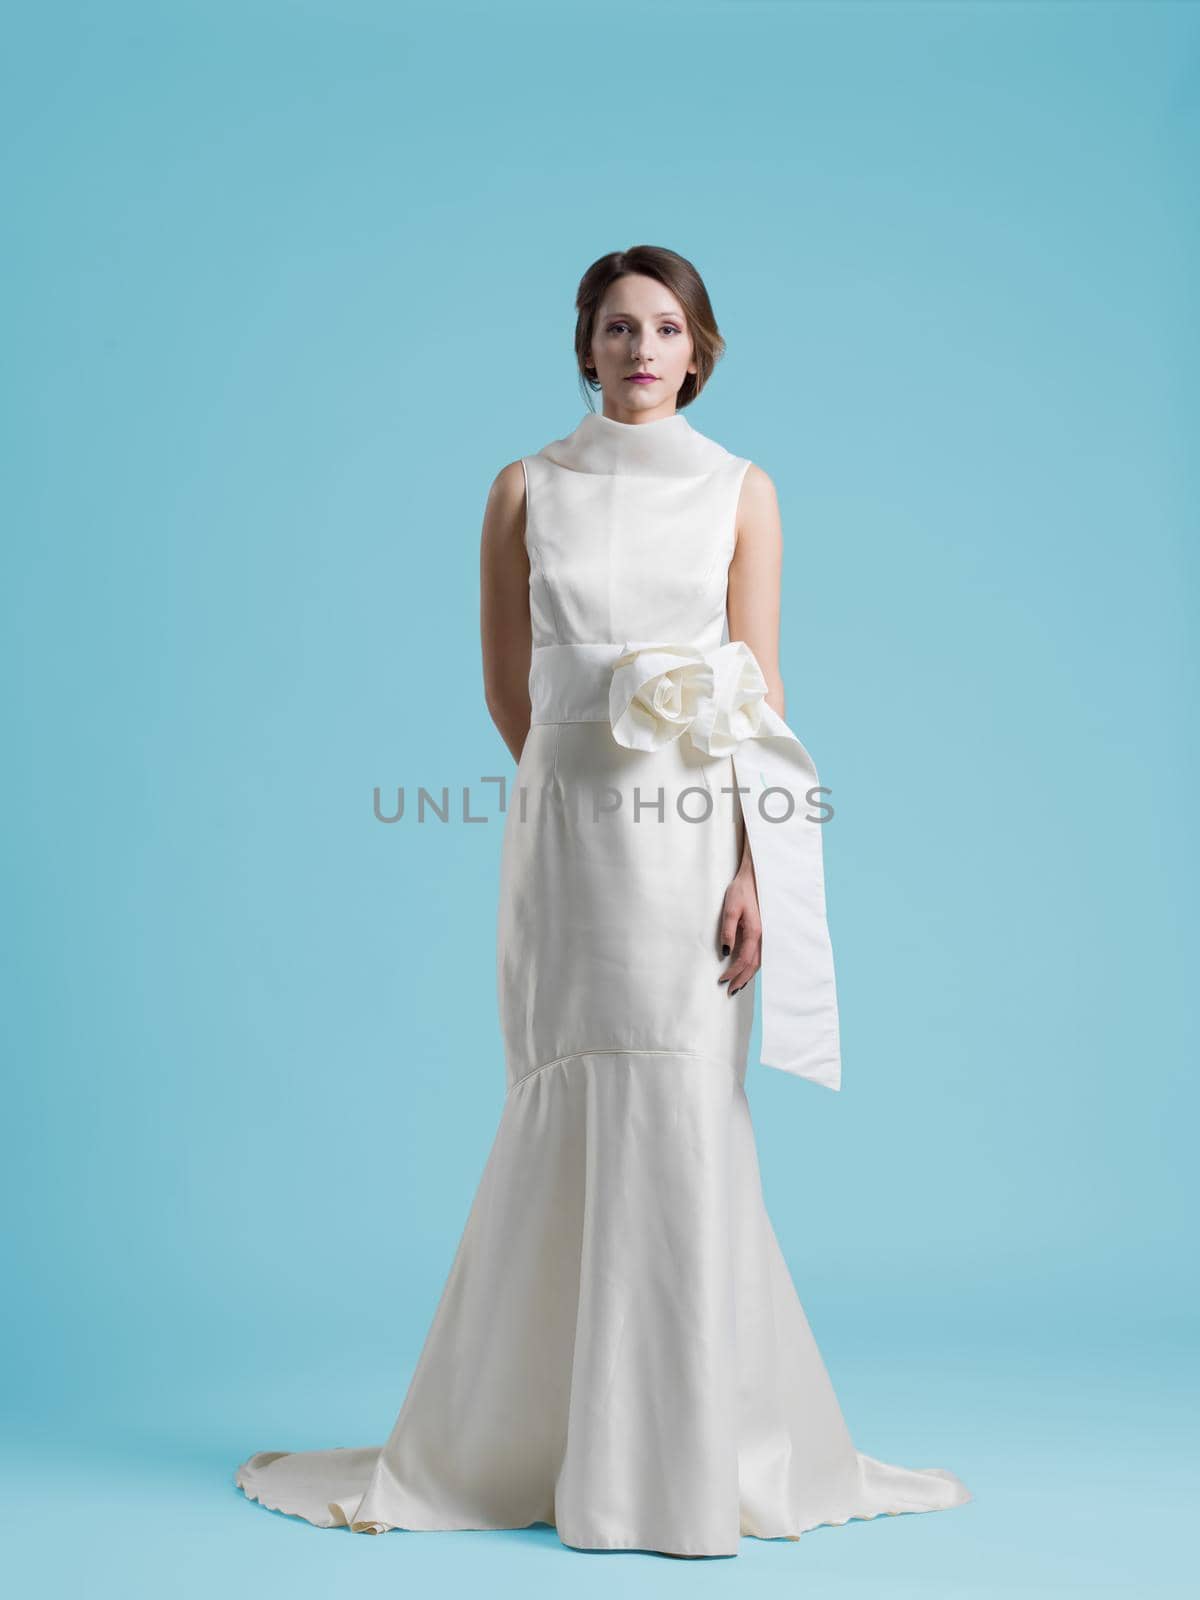 beautiful woman wearing wedding dress against cyan background by dotshock